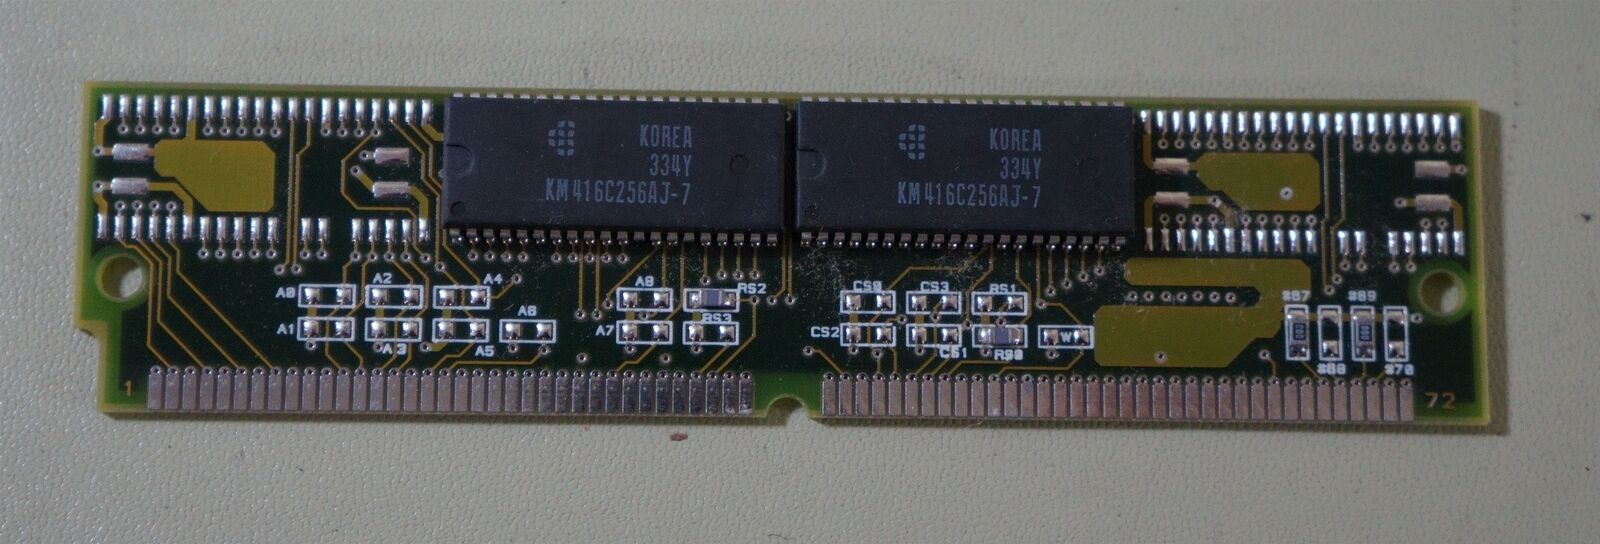 Samsung KMM532256AWP-7 SIMM RAM , 72-Pin, 512K